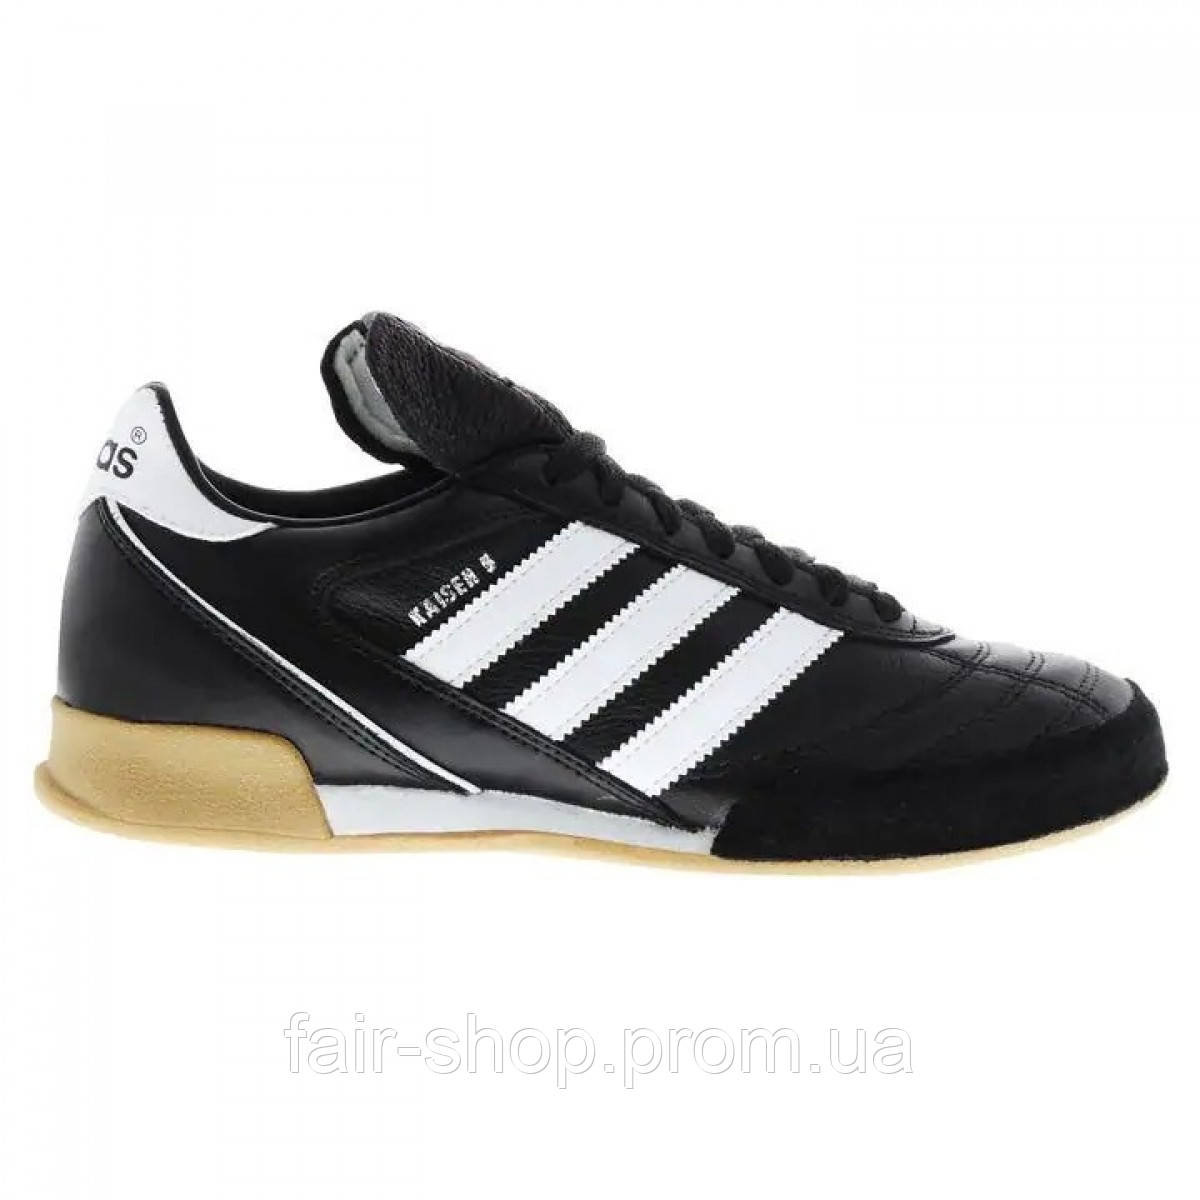 Футзалкі Adidas Kaiser Goal Indoor Trainers Black / Footwear White /, оригінал. Доставка від 14 днів